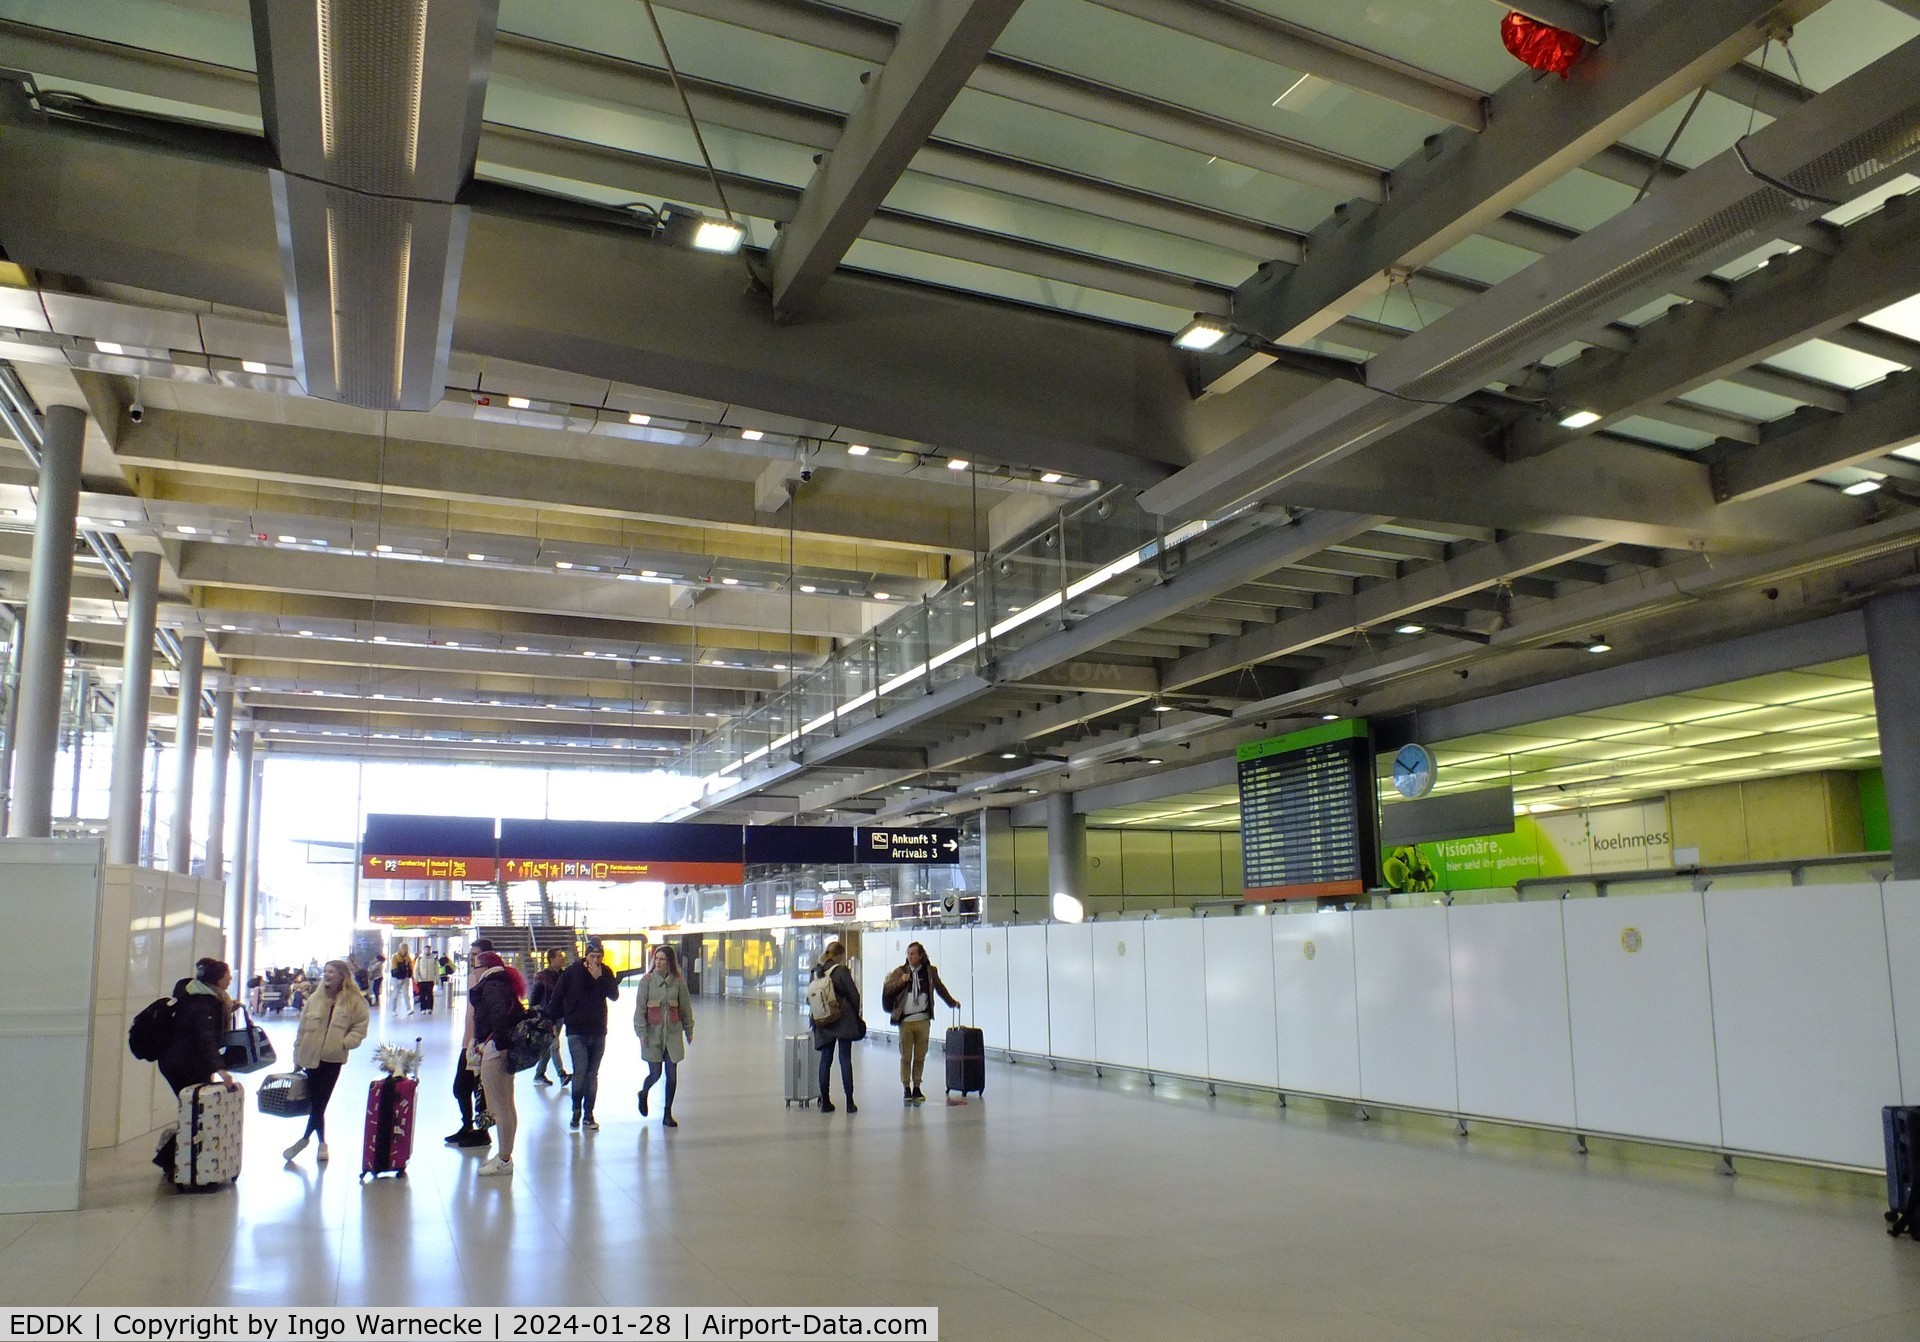 Cologne Bonn Airport, Cologne/Bonn Germany (EDDK) - inside the arrival level of terminal 2 at Köln/Bonn airport